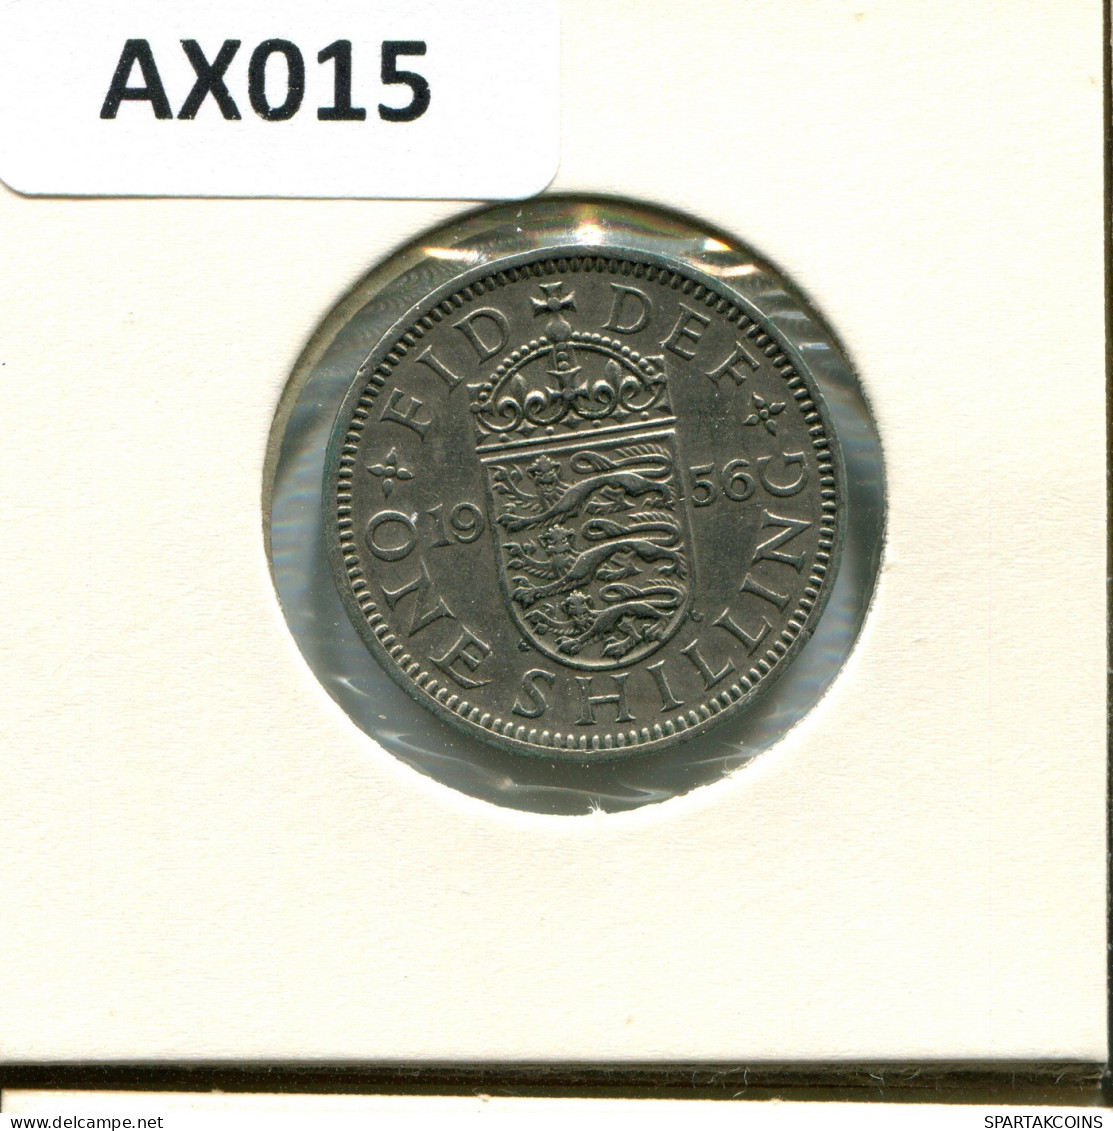 SHILLING 1956 UK GREAT BRITAIN Coin #AX015.U.A - I. 1 Shilling